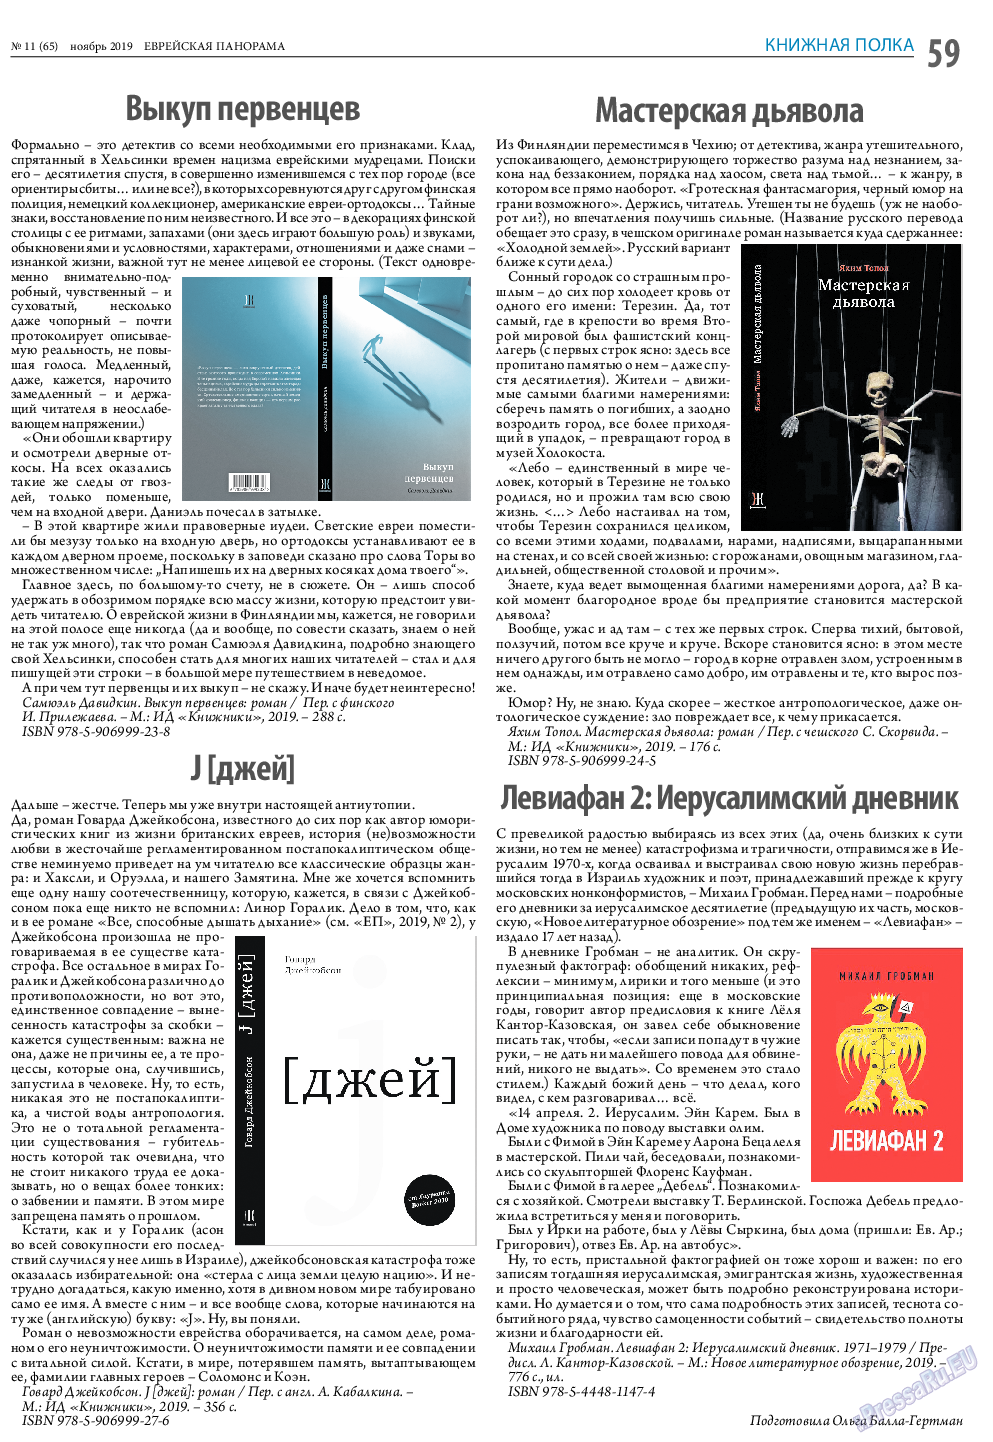 Еврейская панорама, газета. 2019 №11 стр.59